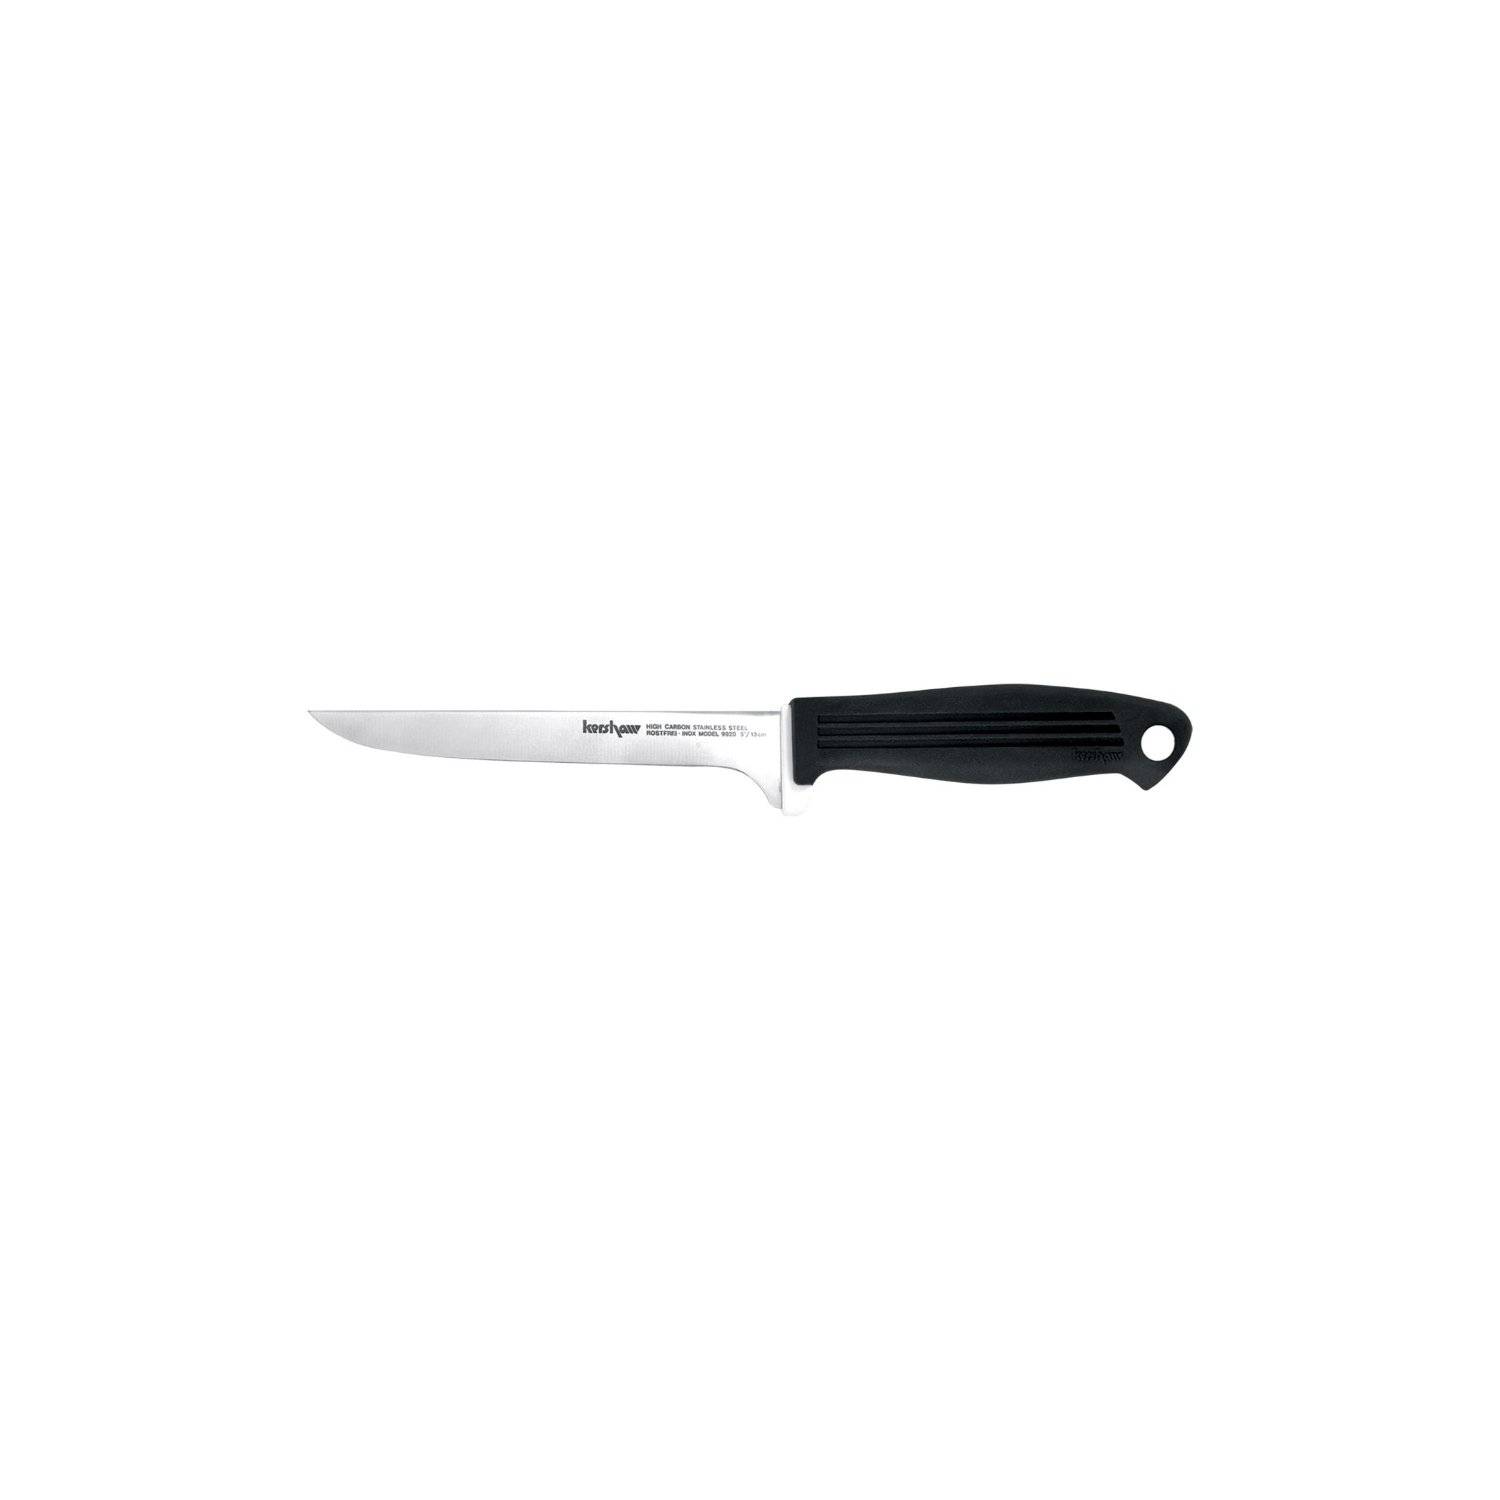 Kershaw 9900 Series 5-Inch Stainless-Steel Boning Knife  $19.72